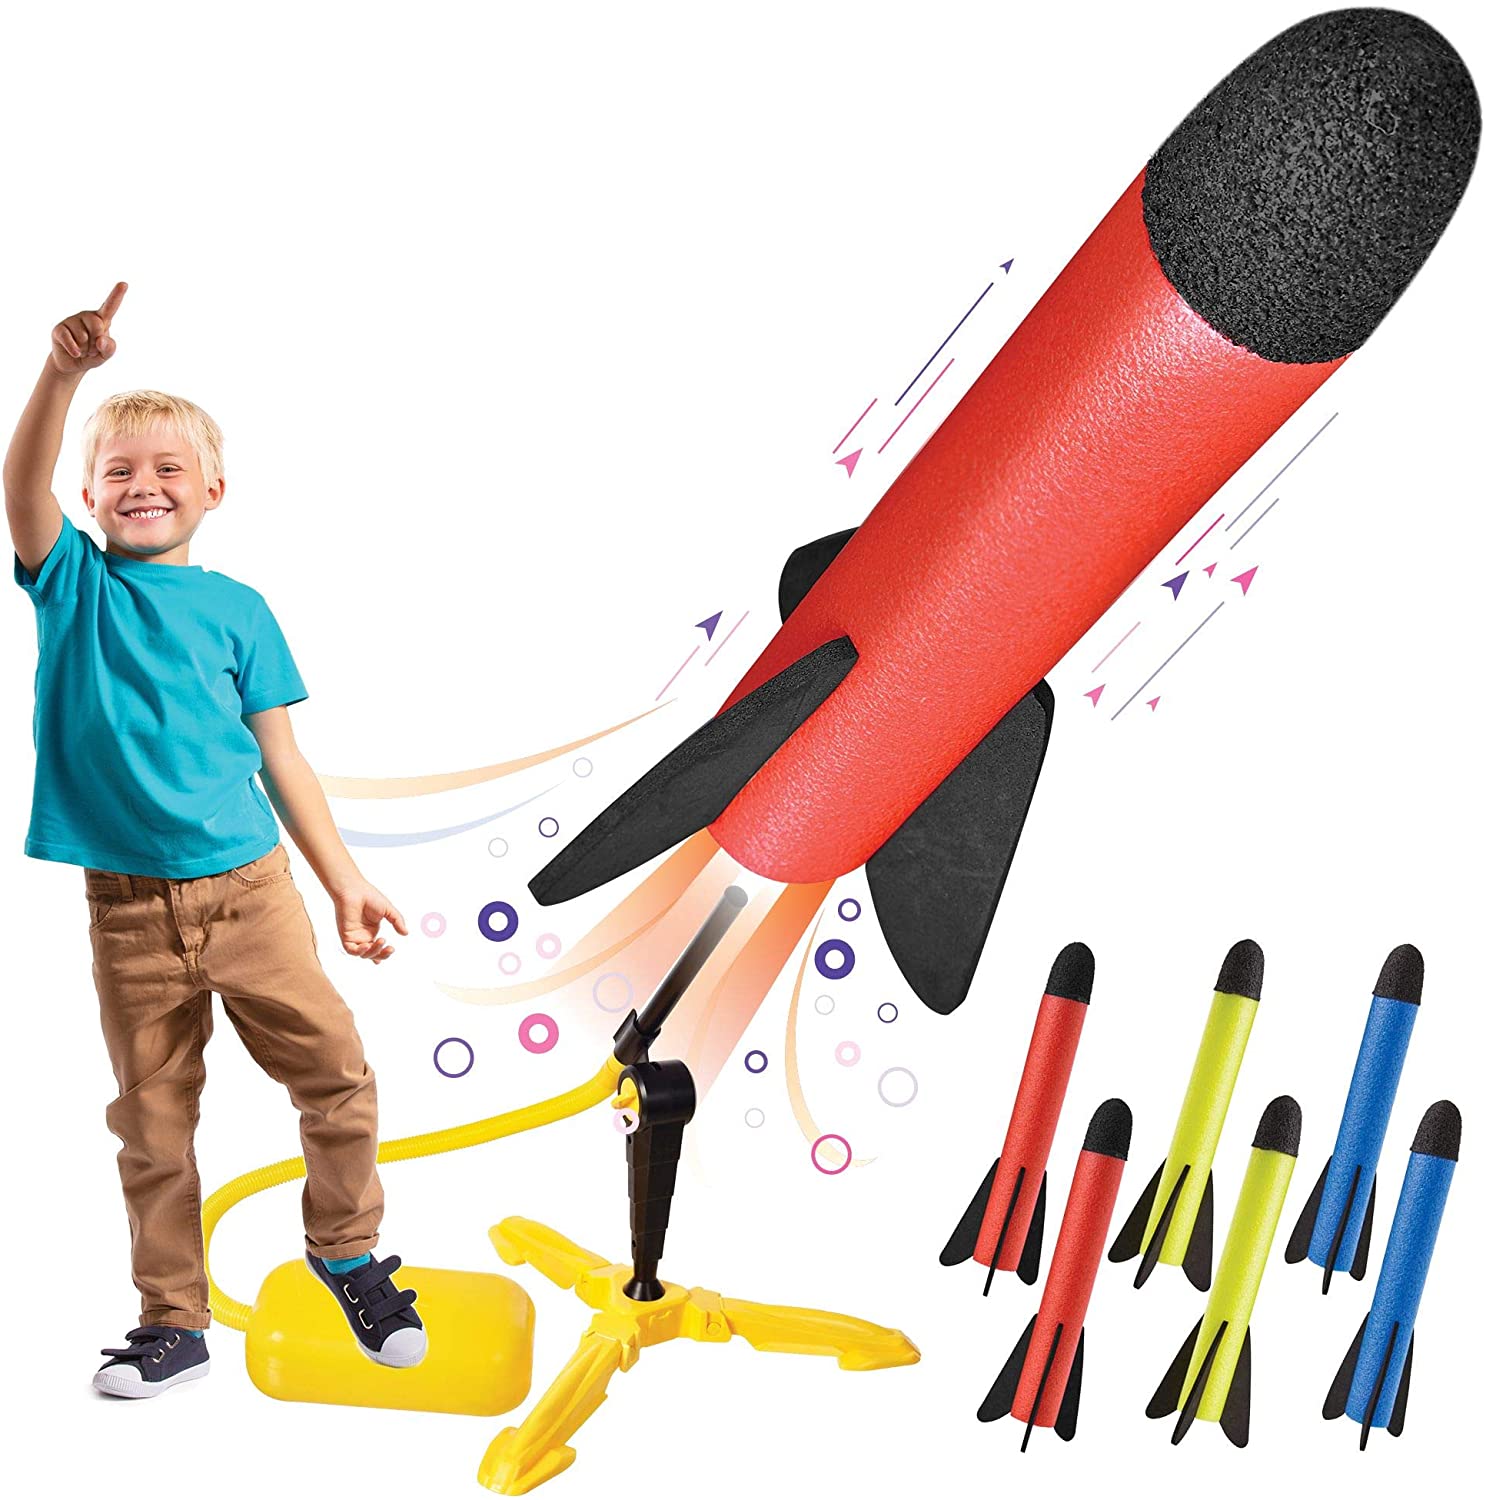 Motoworx Sturdy Outdoor Toy Rocket Launcher